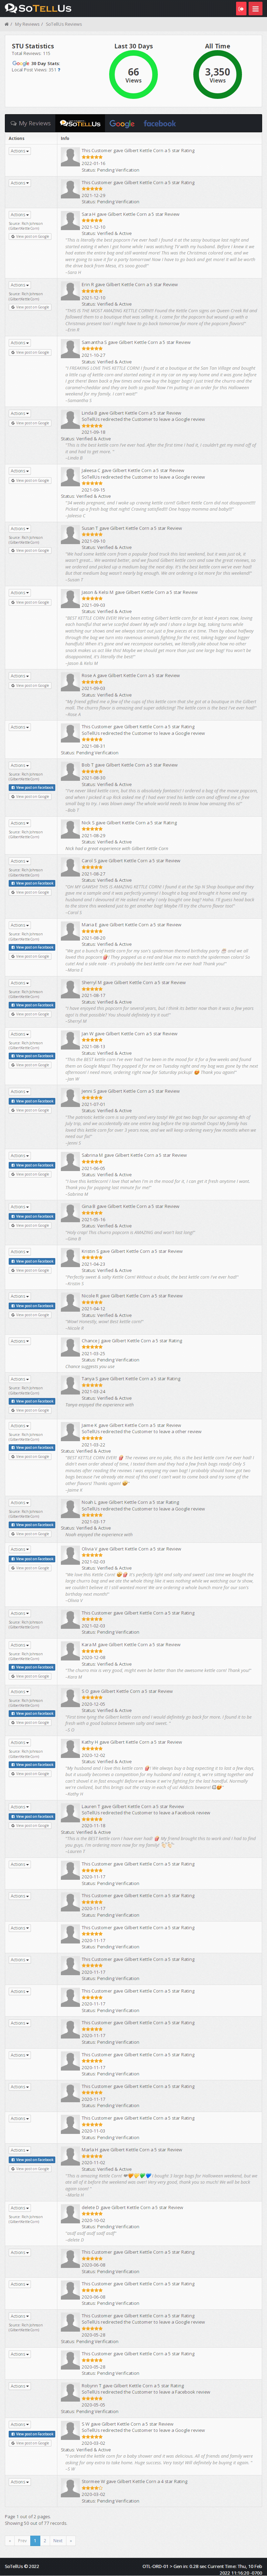 SoTellUs Profile Page Reviews